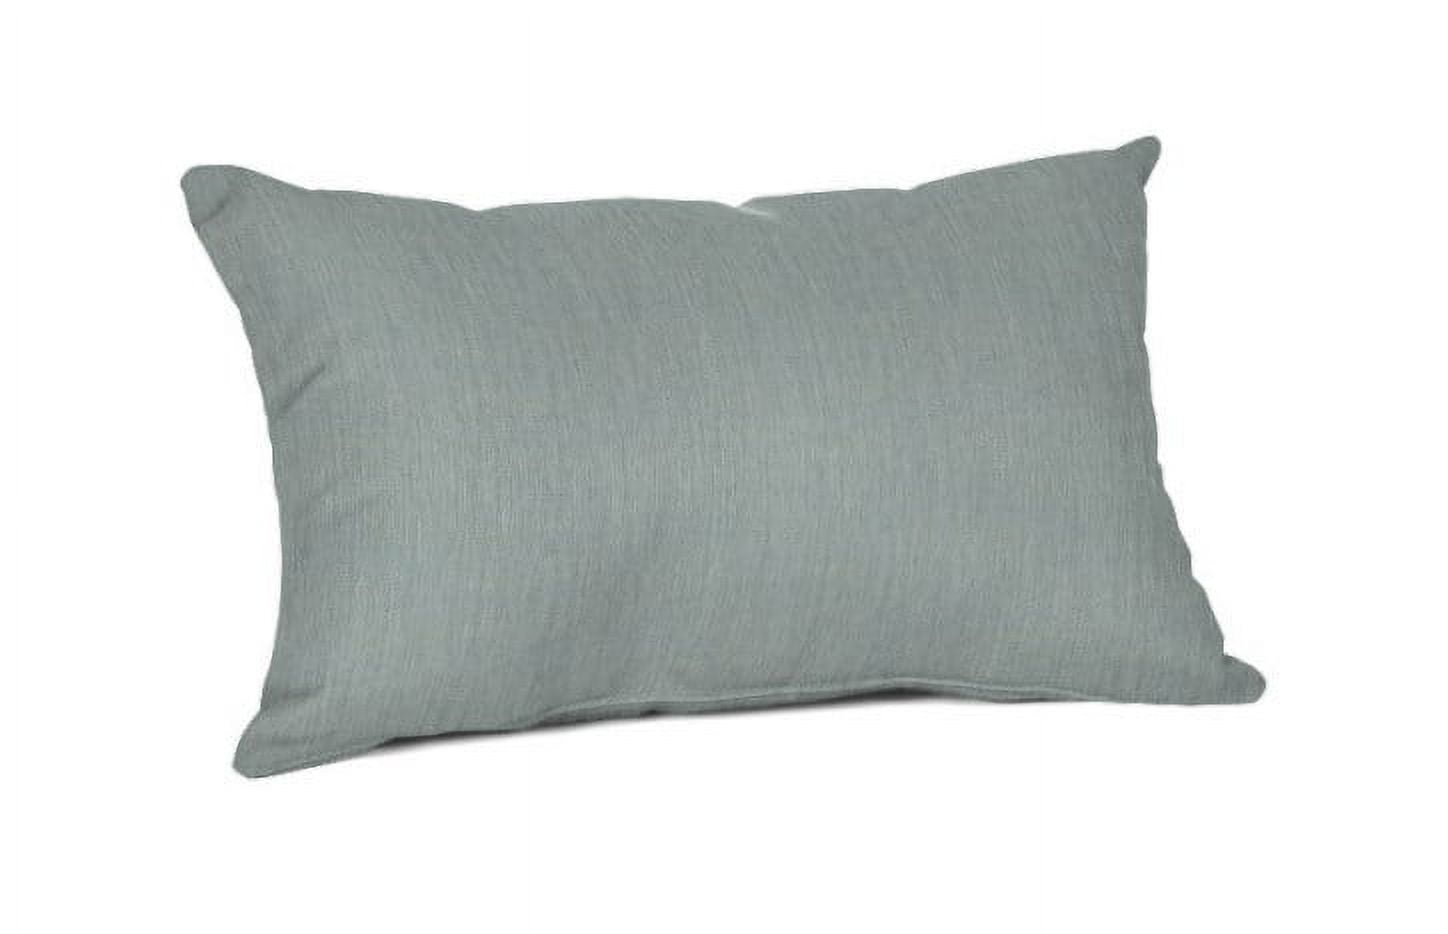 Sunbrella® Lido Pillow curated on LTK